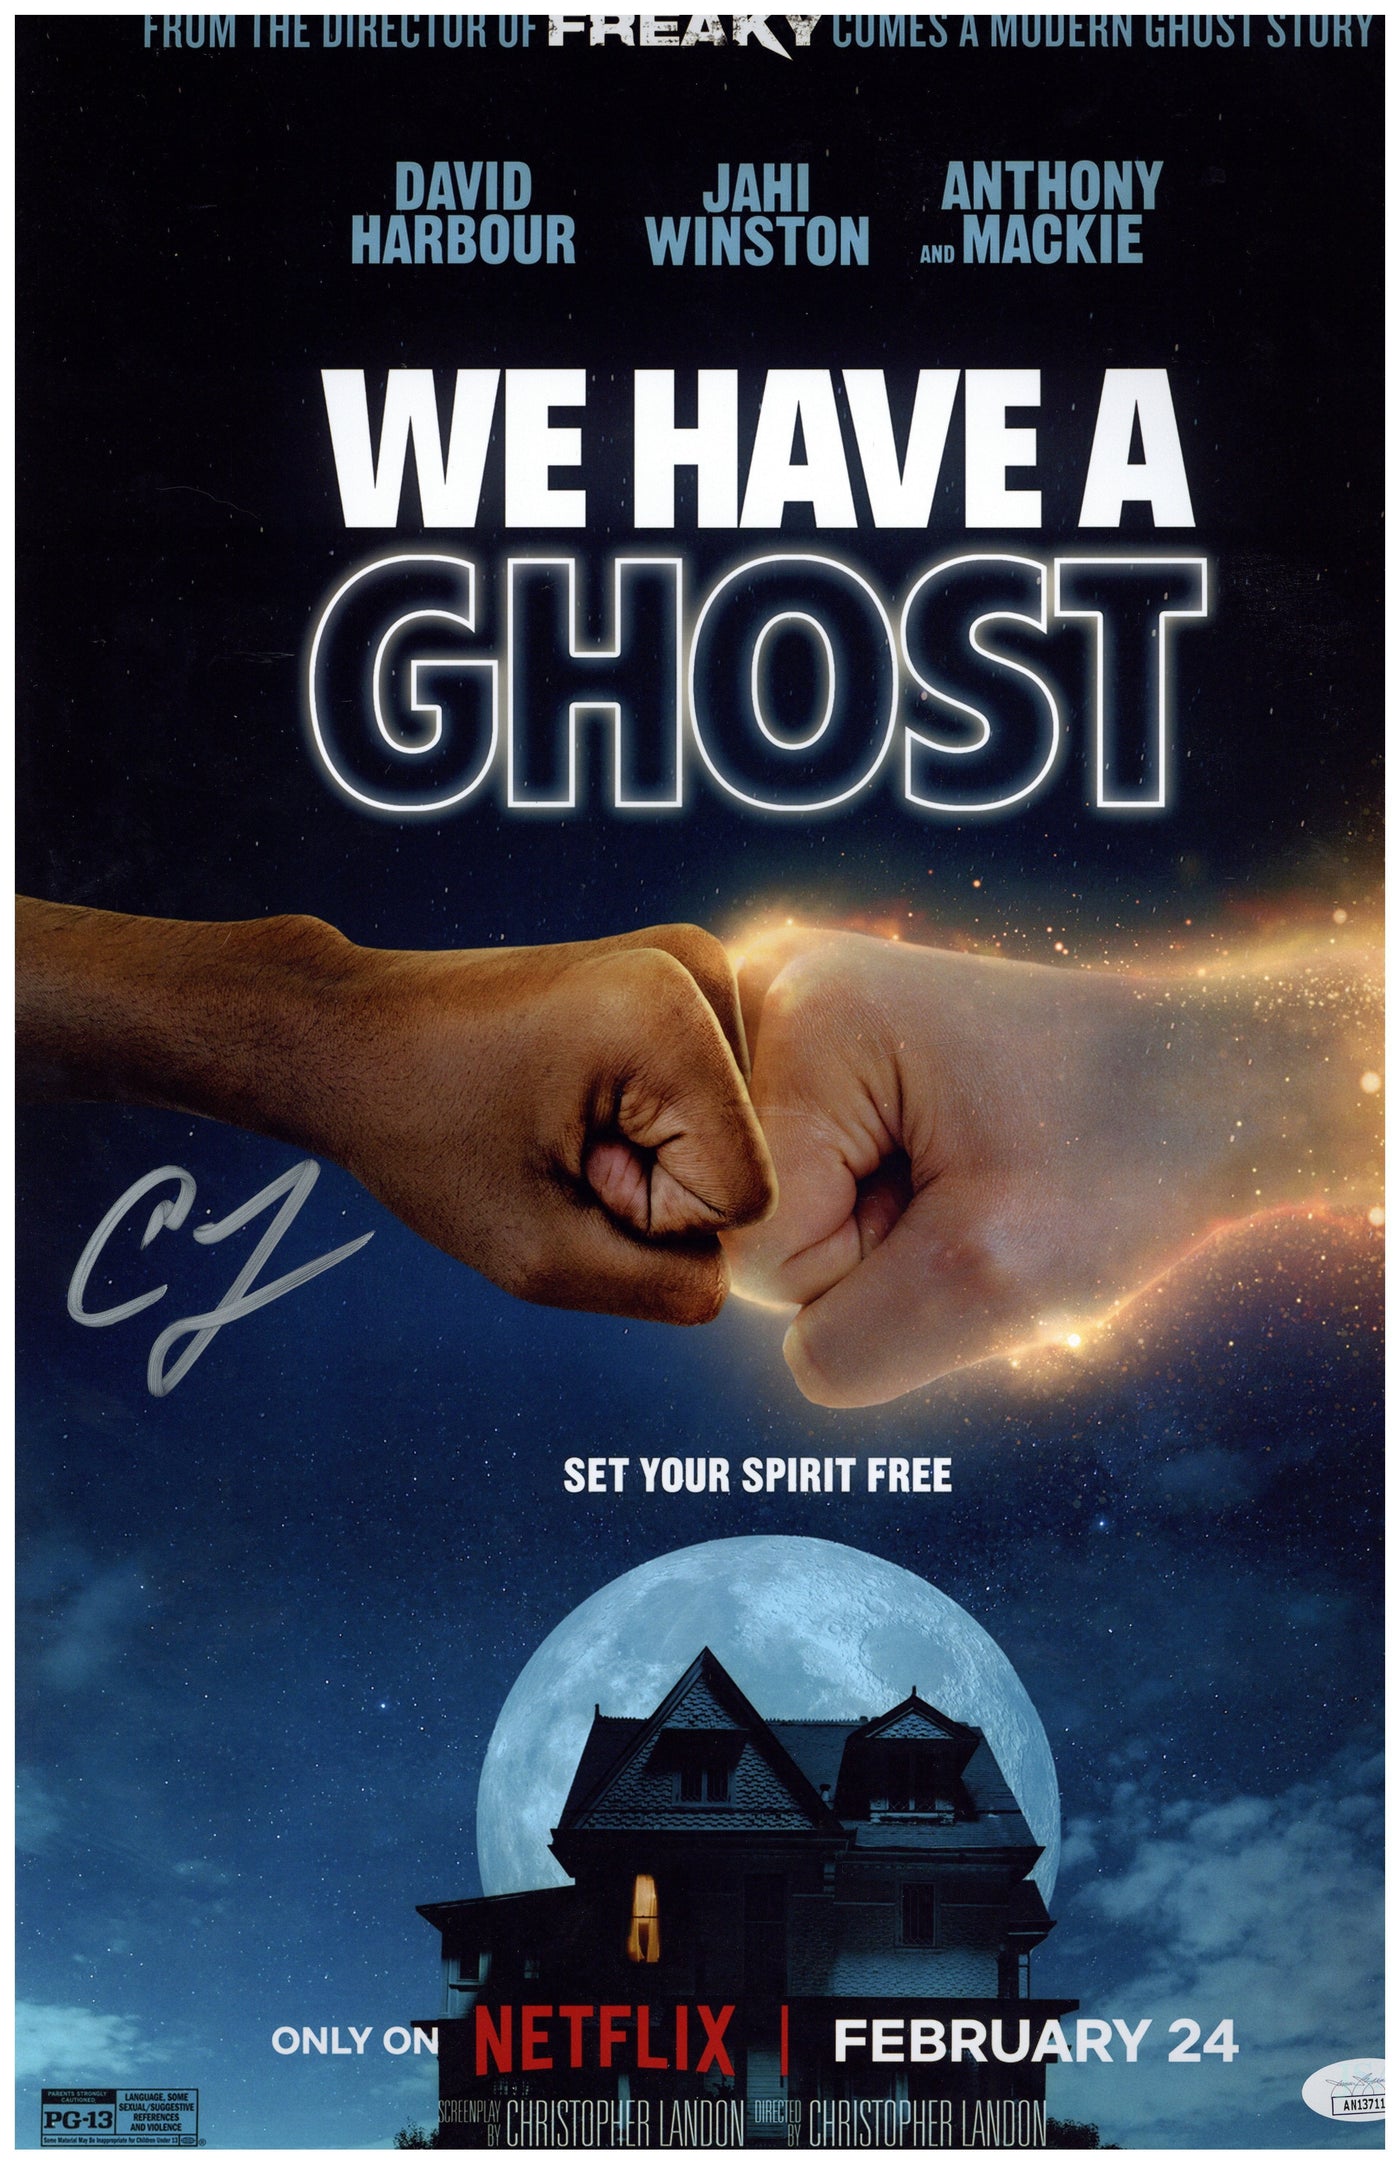 Christopher Landon Signed 12x18 Poster We Have A Ghost Autographed JSA COA